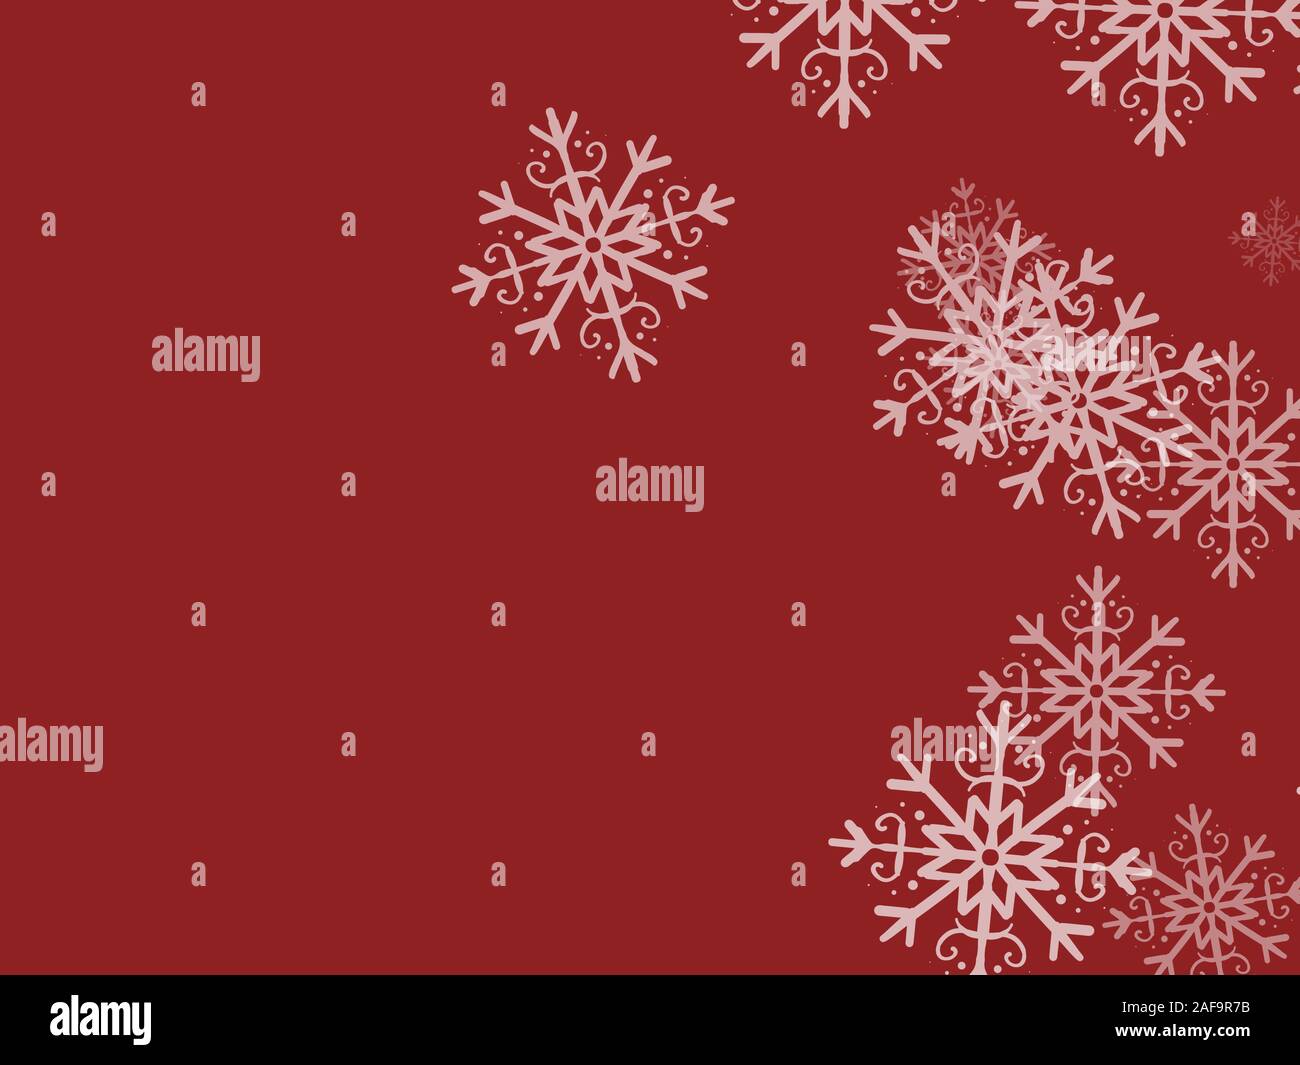 Winter Snow Gift Card Design Stock Photo